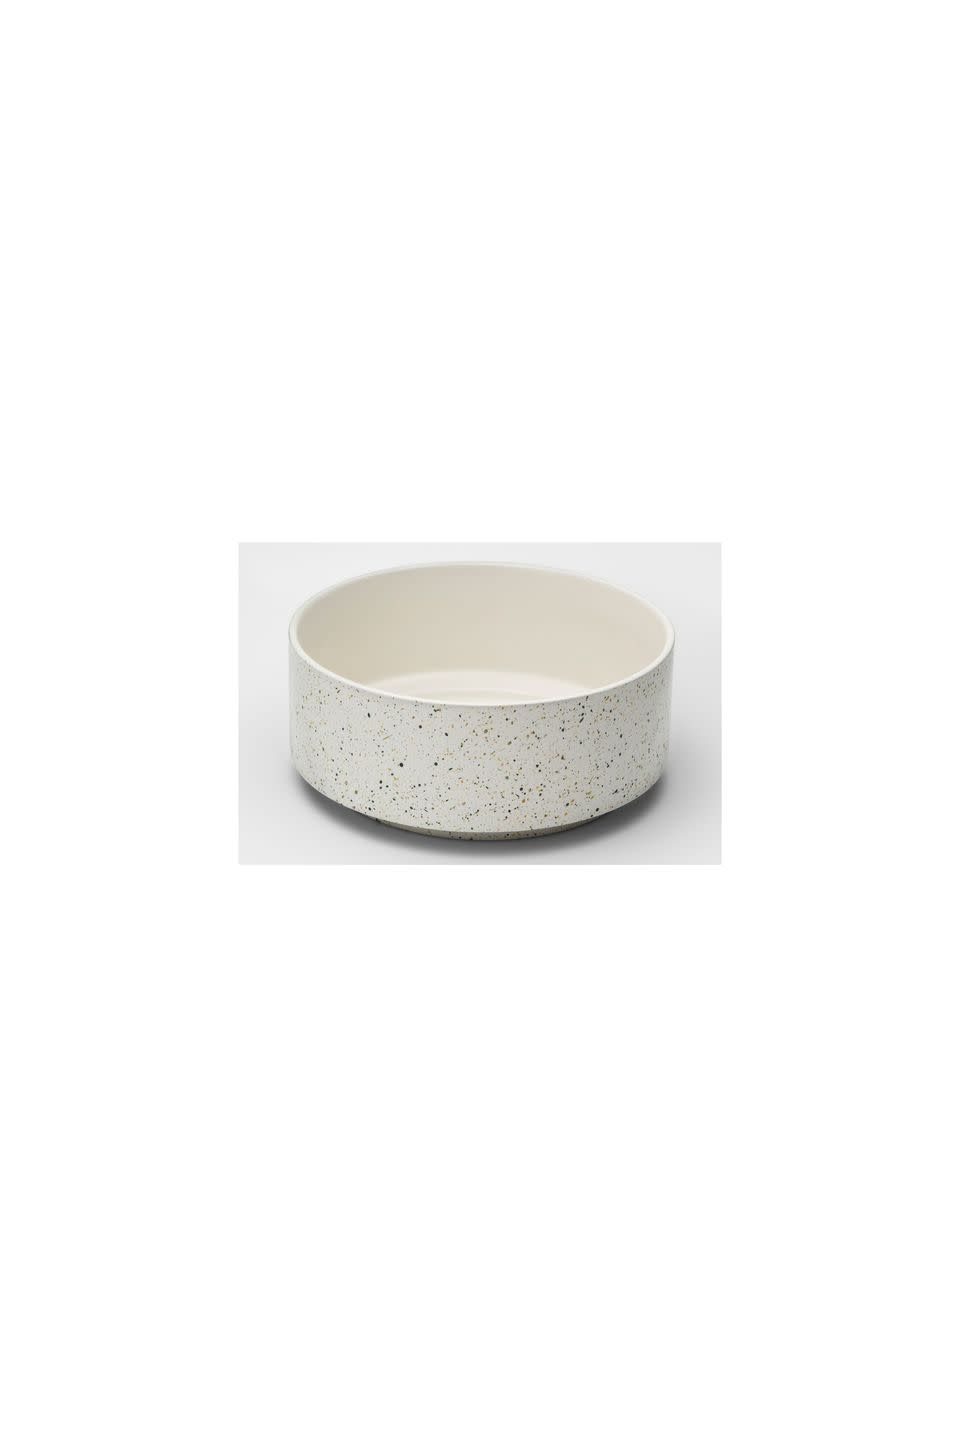 11) Speckled White Decorative Bowl